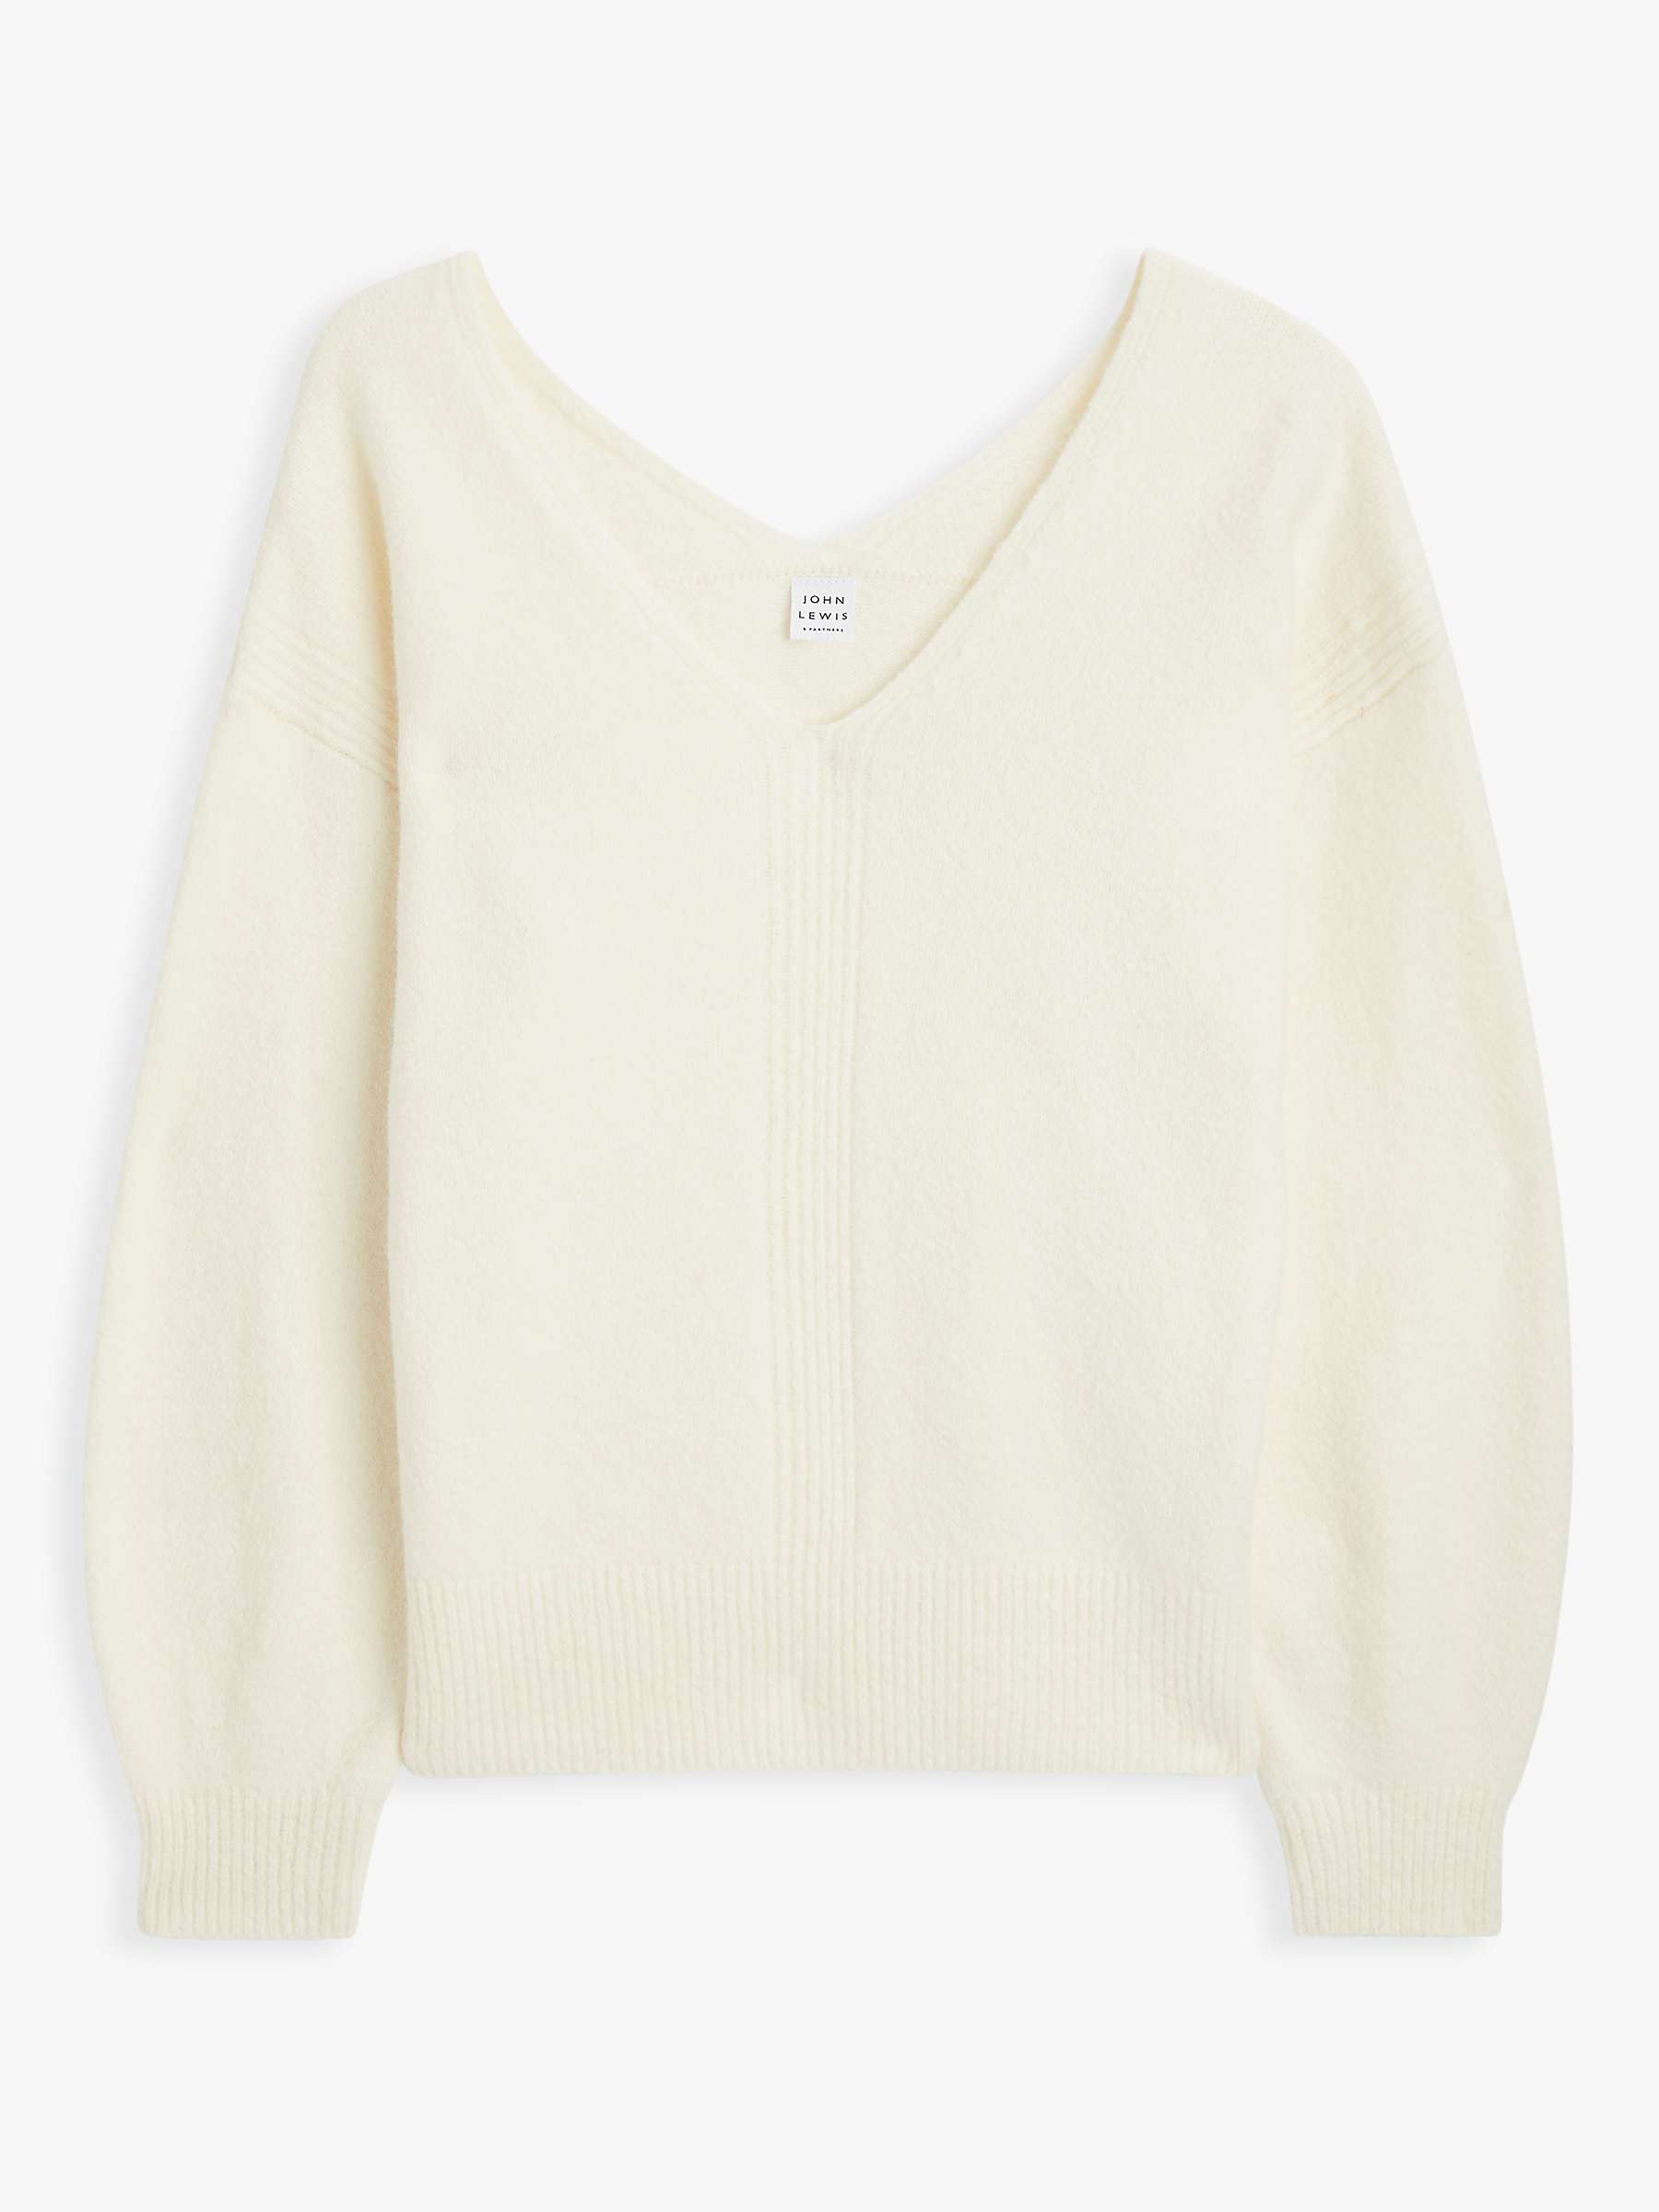 John Lewis Soft V- Neck Cotton Sweater, Off White at John Lewis & Partners